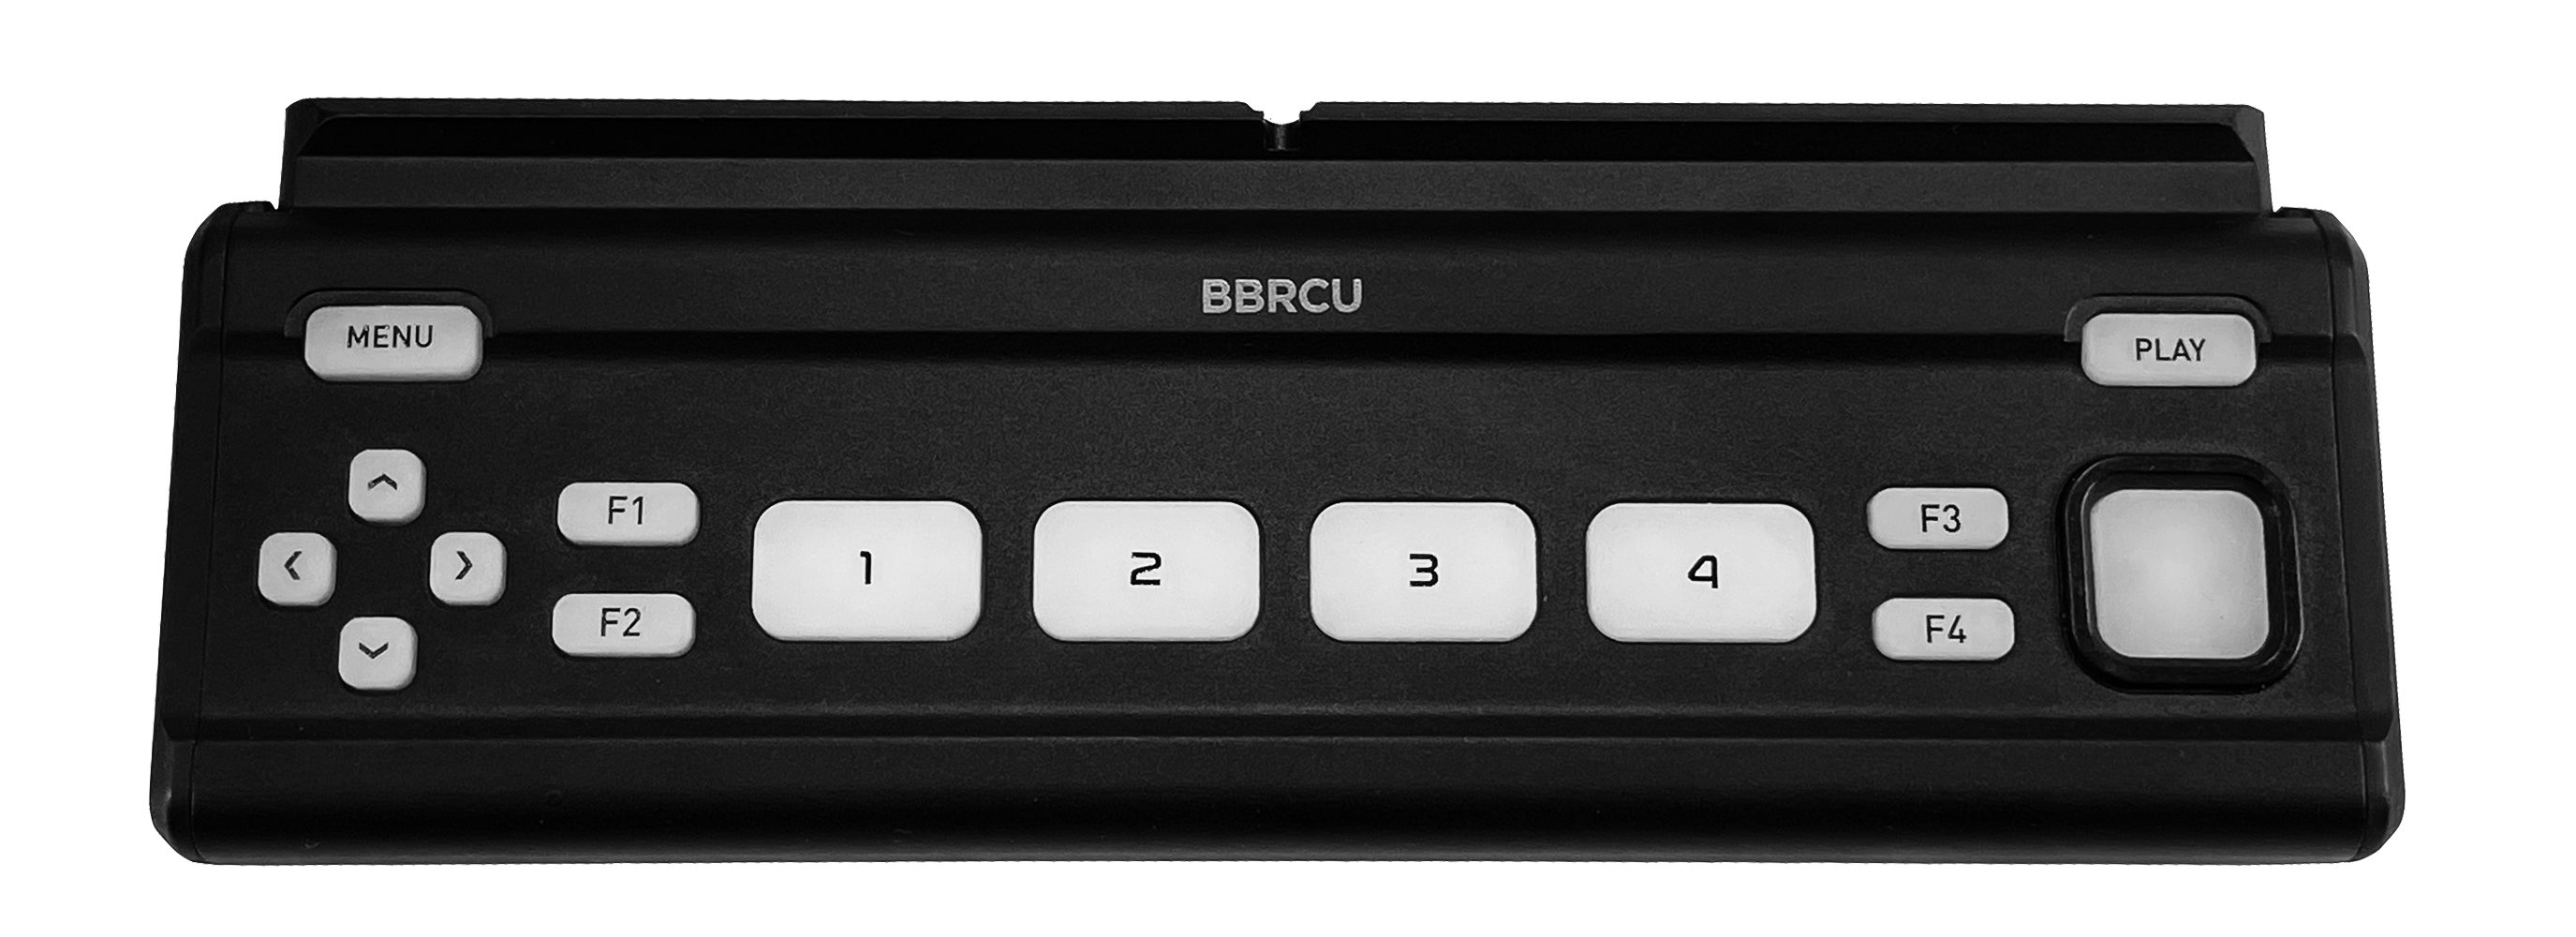 BBRCU - Button Bar Remote Control Unit